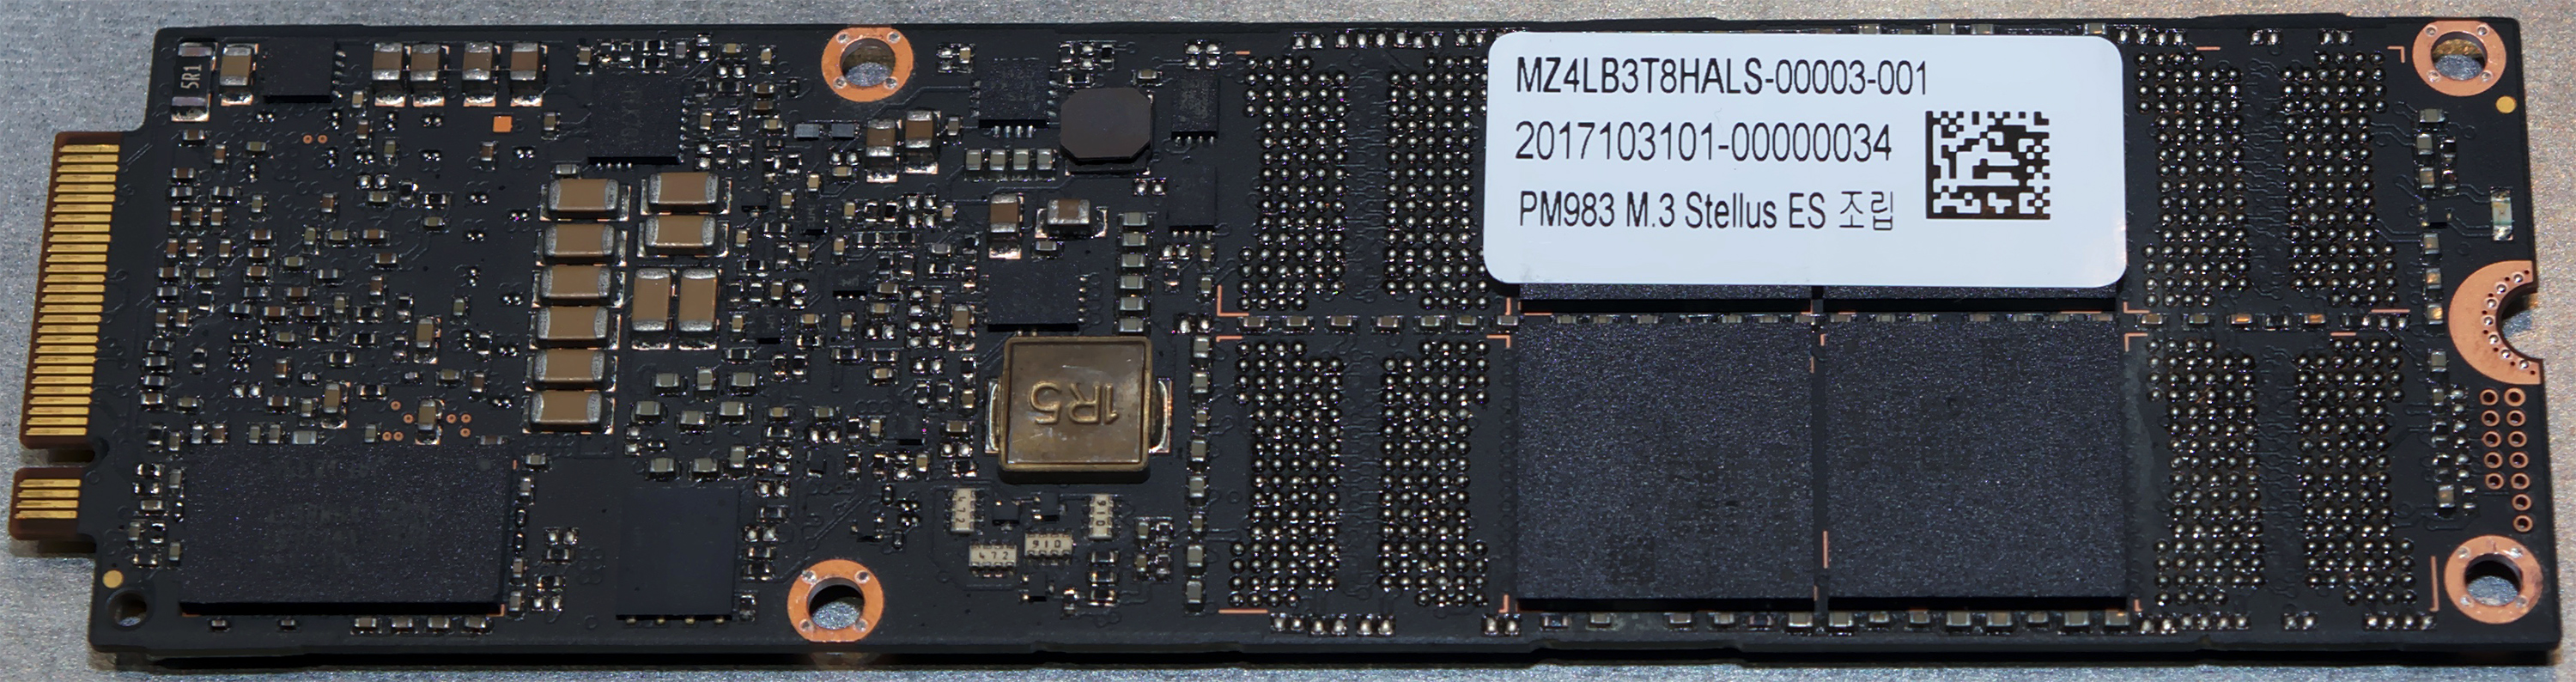 dialekt Forskel Enlighten Hands On With Samsung's New NF1 SSDs: 36 x 16 TB in 1U